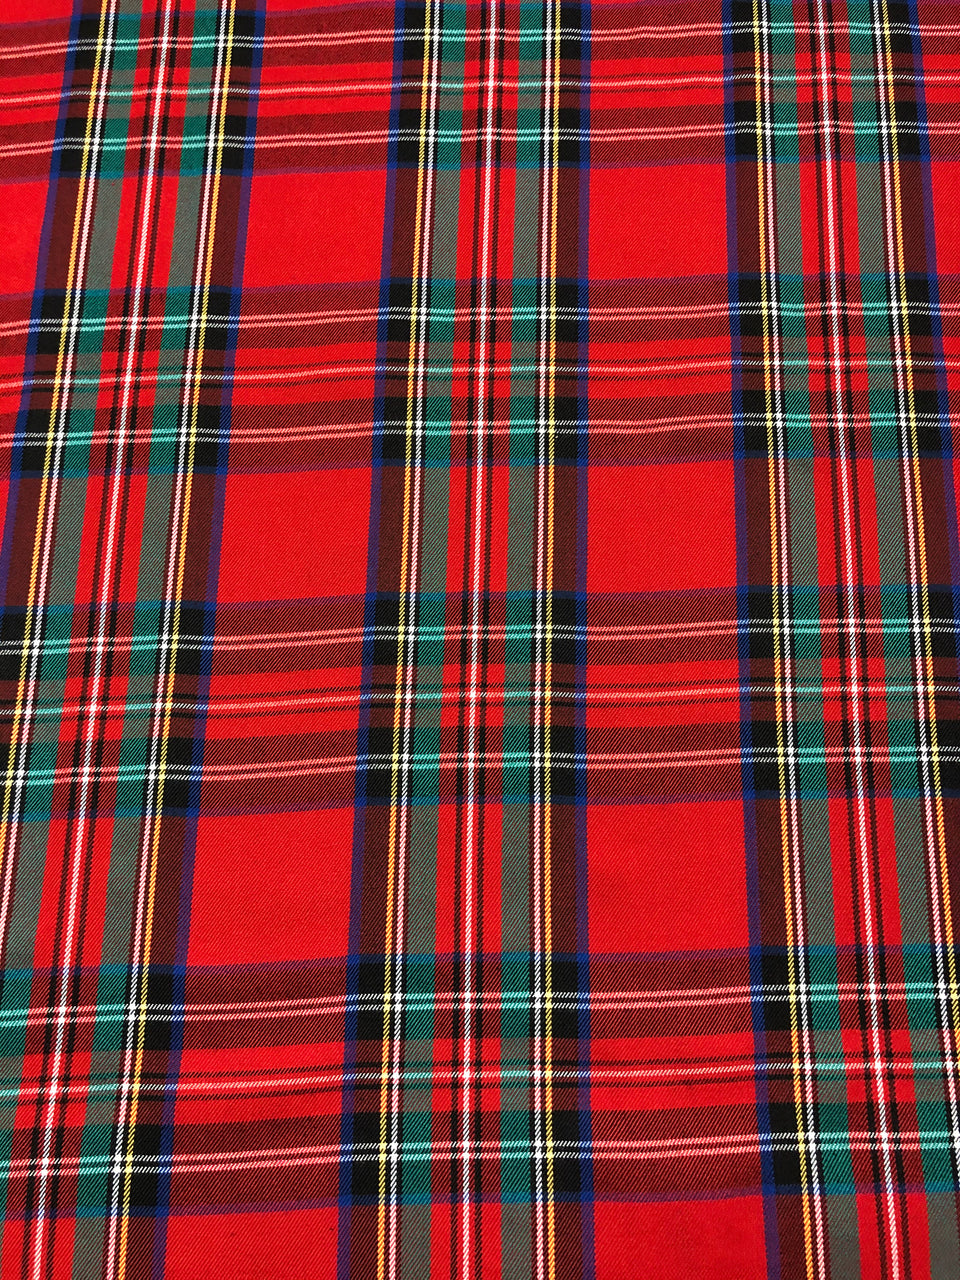 ☆ RED TARTAN S ☆ Royal Stewart inspired Fabric